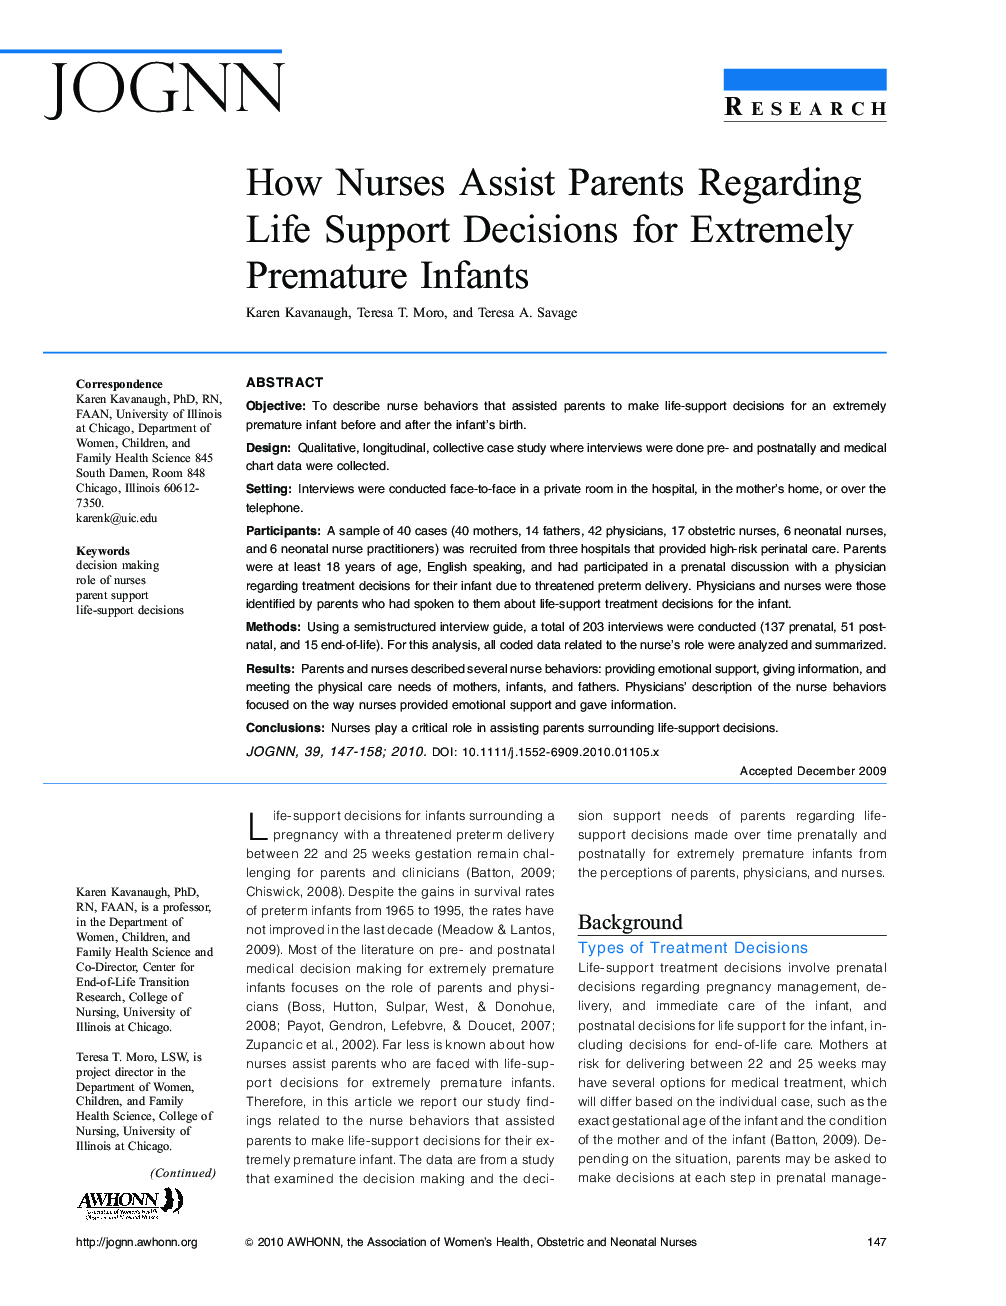 How Nurses Assist Parents Regarding Life Support Decisions for Extremely Premature Infants